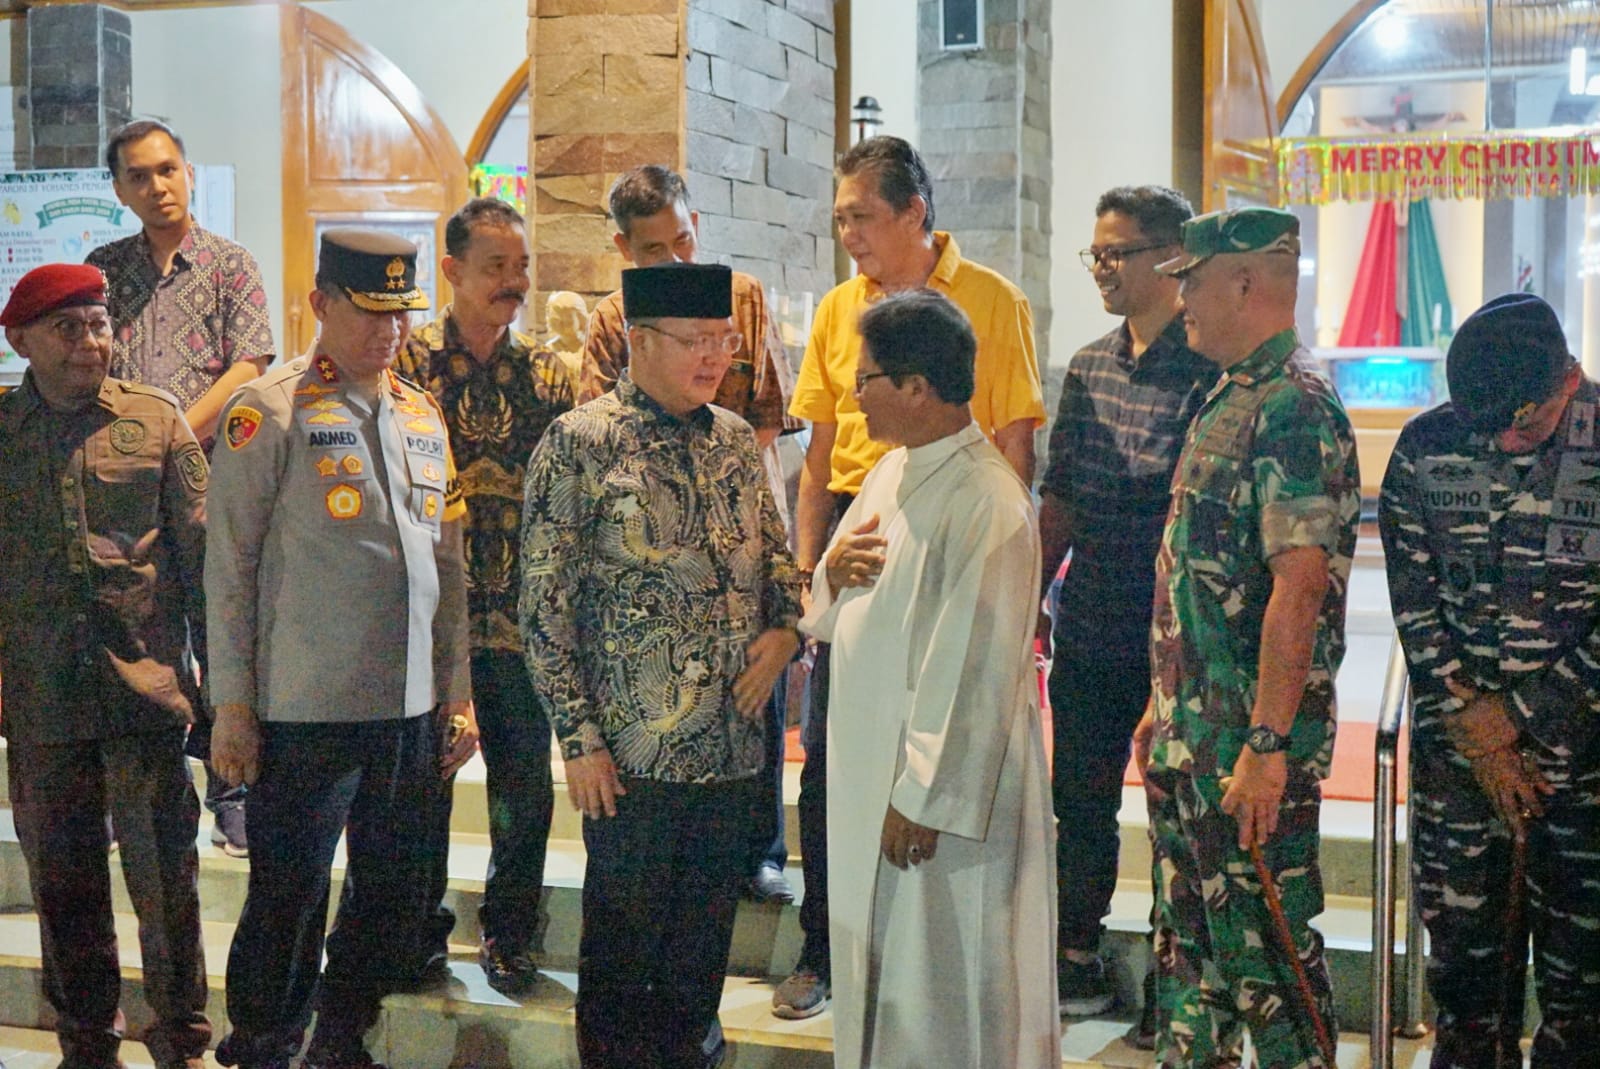 Laporan Lengkap Tahun Baru di Bengkulu Aman dan Situasi Terkendali Disampaikan ke Kapolri dan Panglima TNI